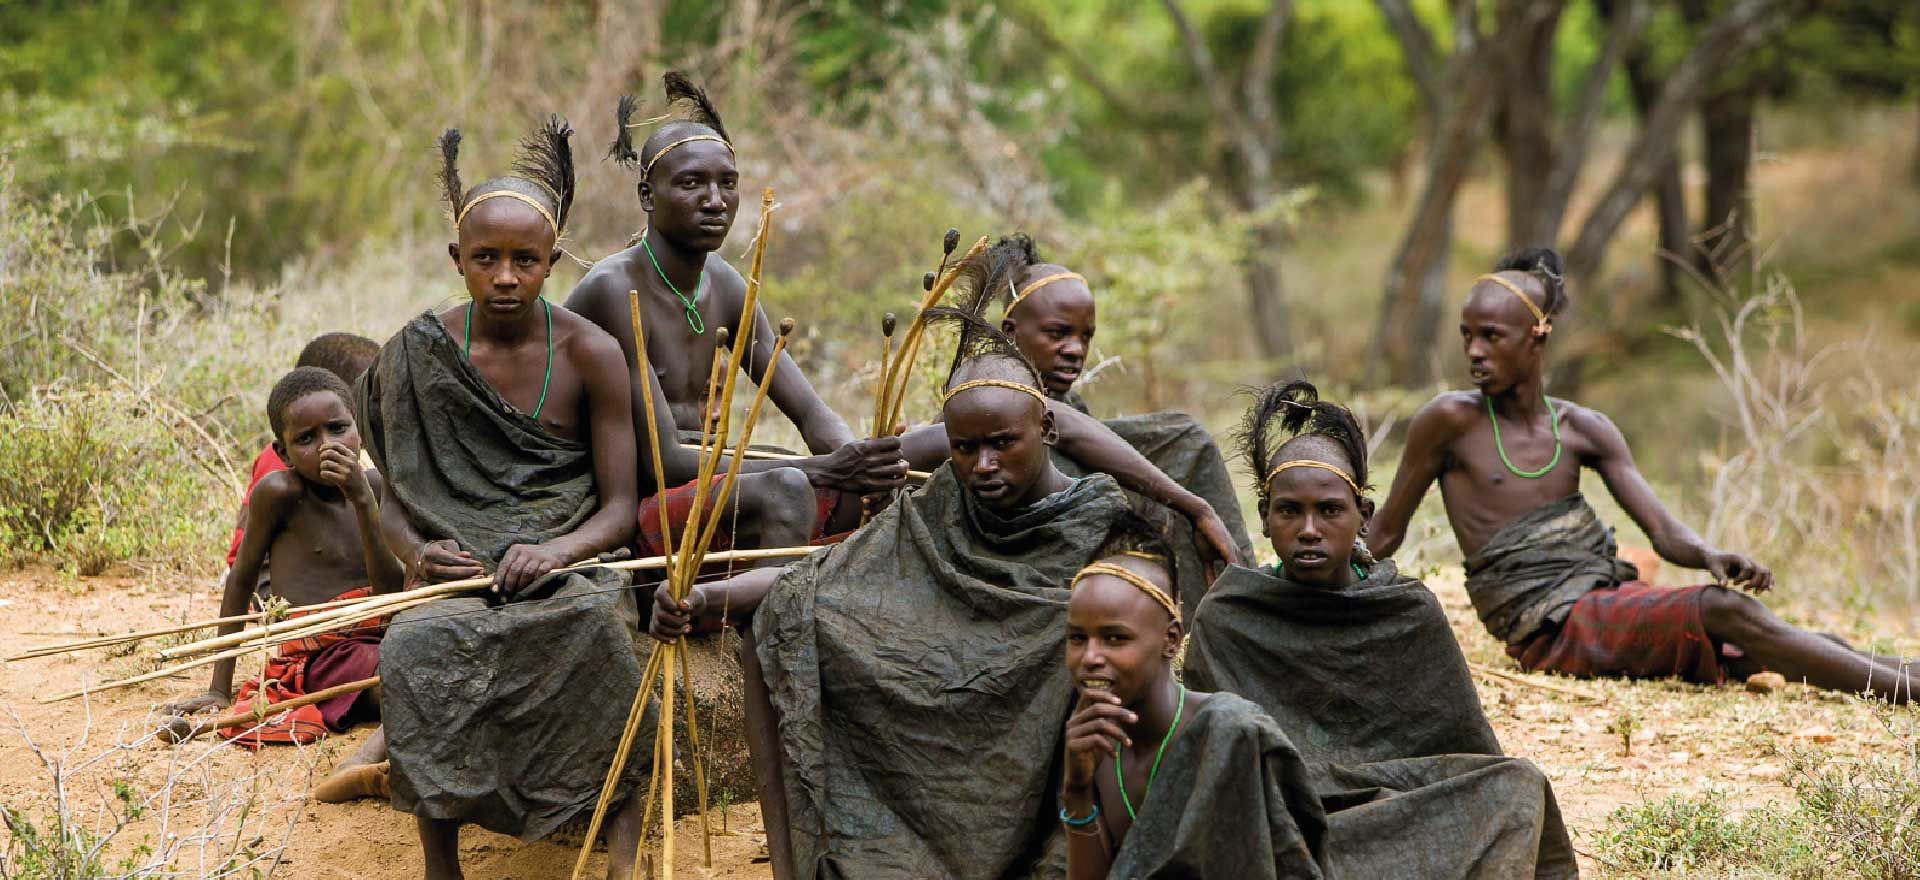 Tribal groups in northern Kenya - tribal tours